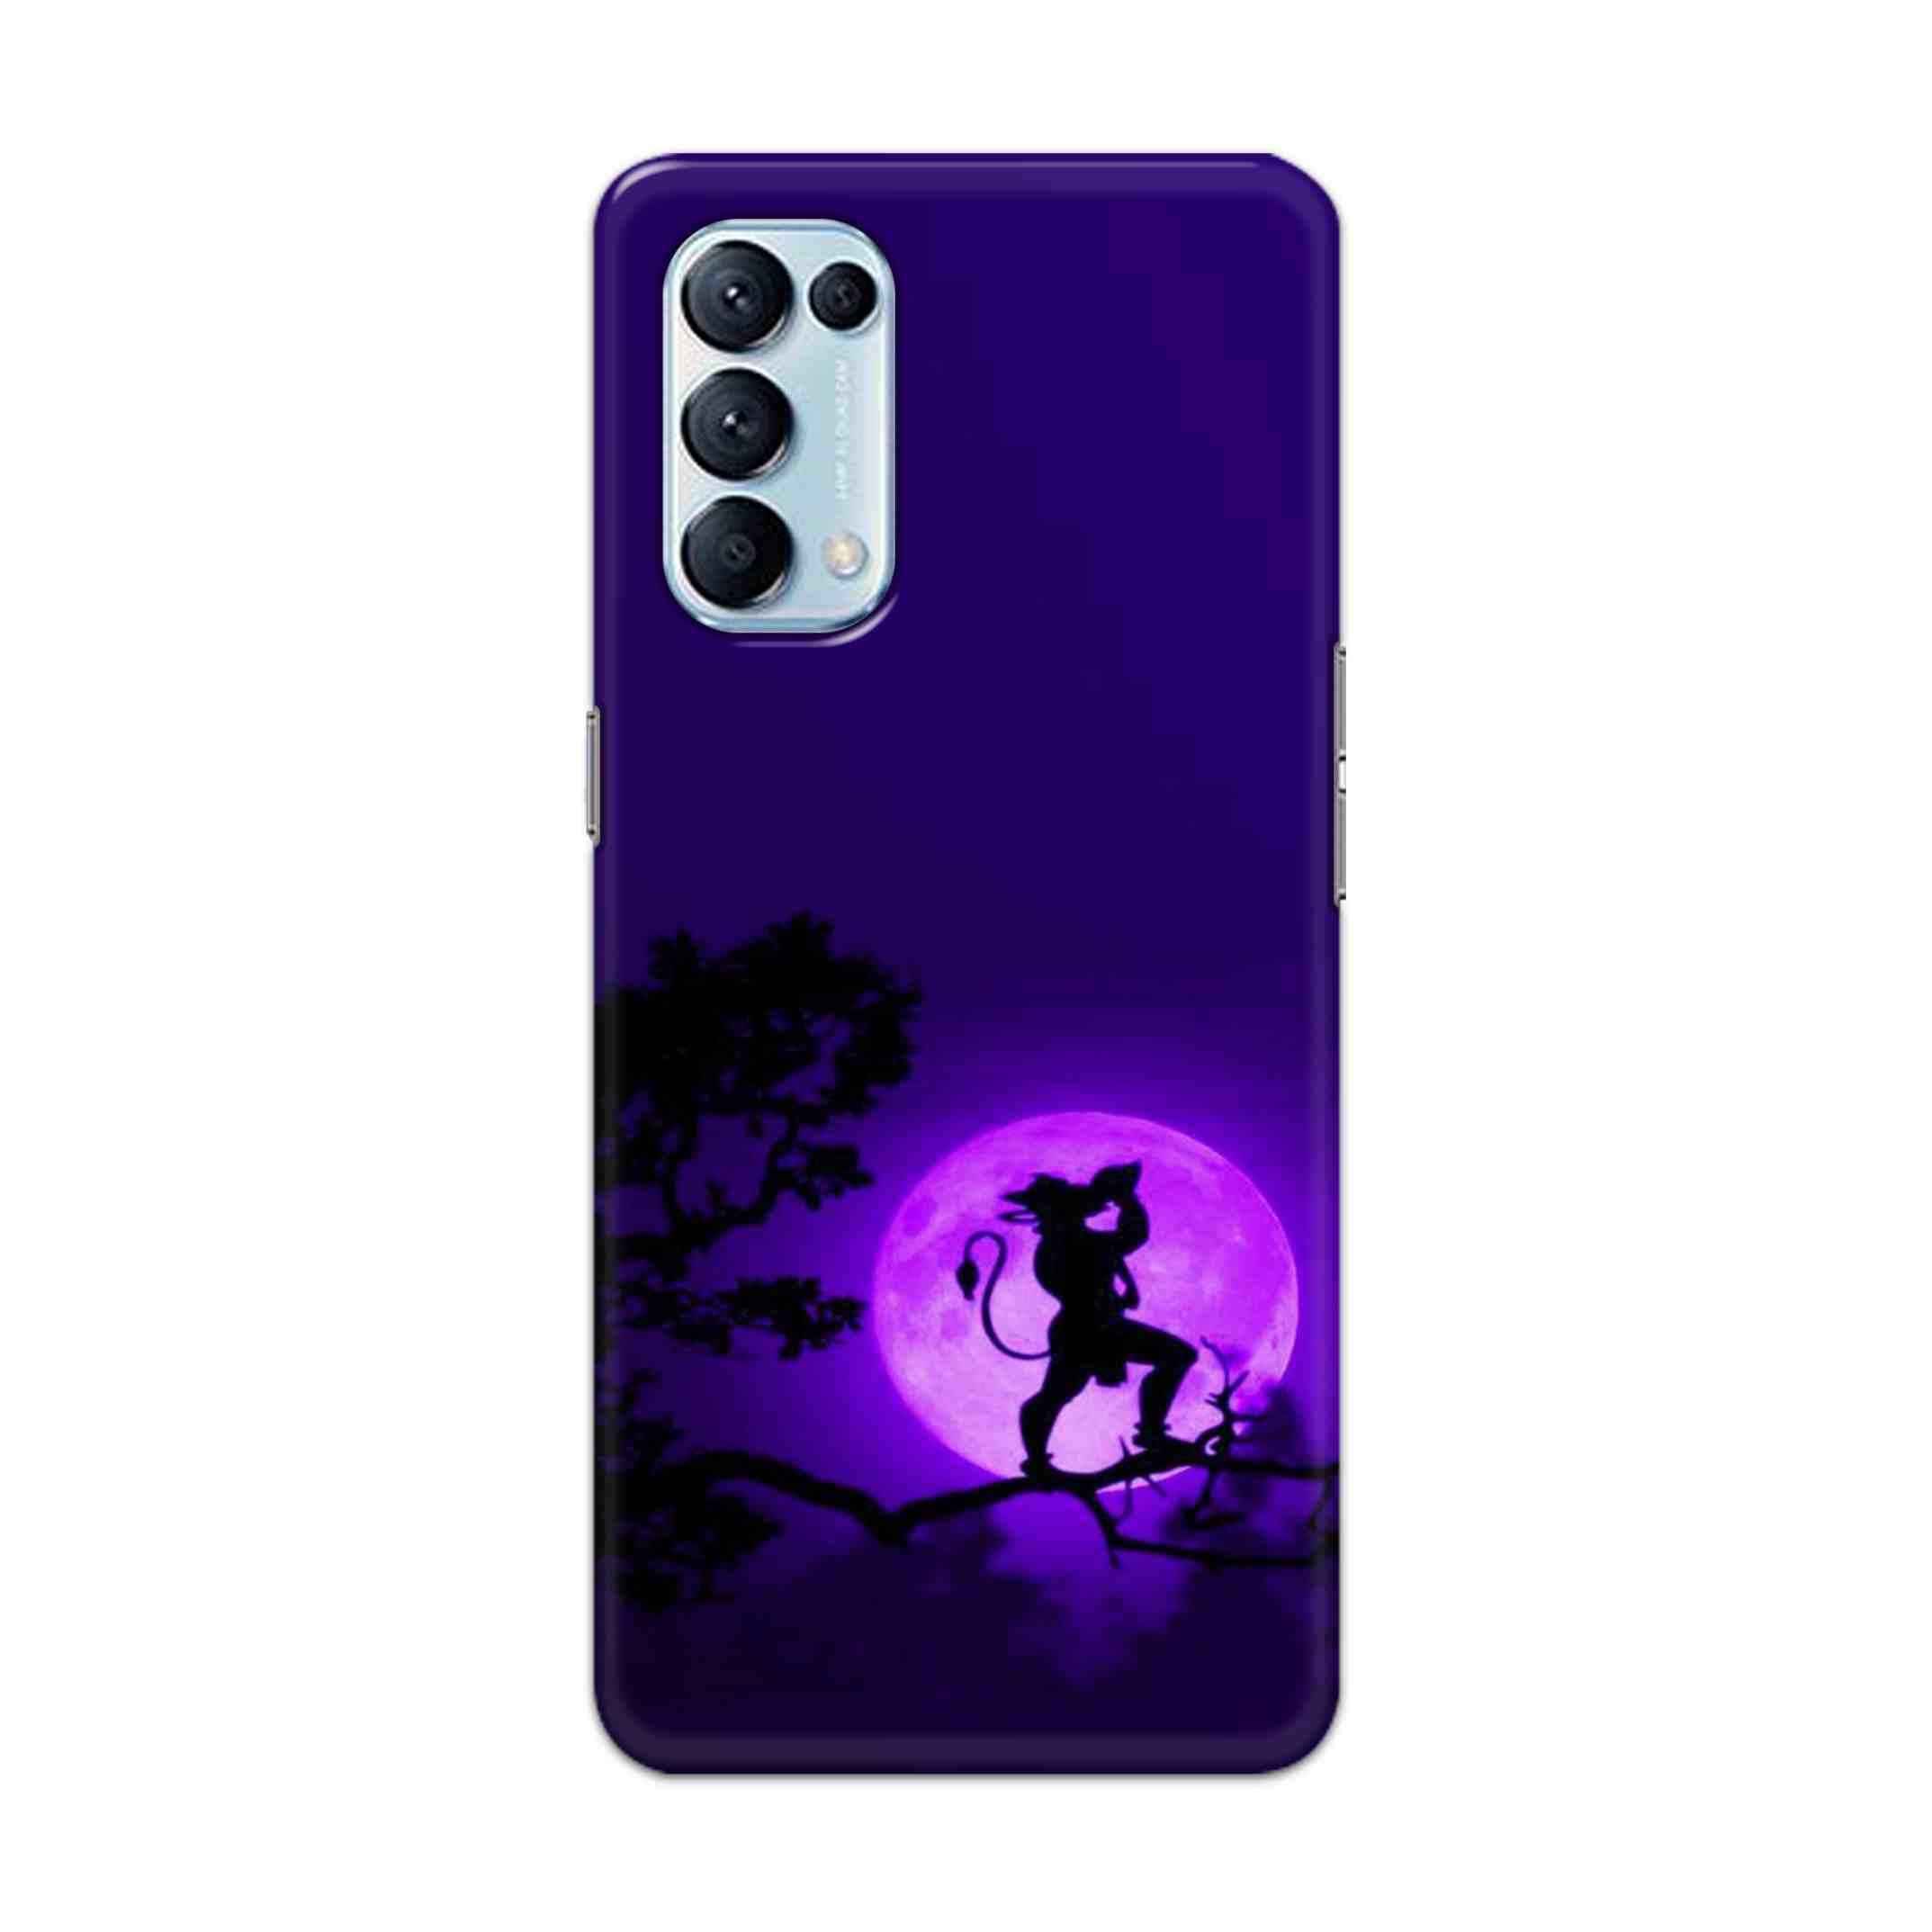 Buy Hanuman Hard Back Mobile Phone Case Cover For Oppo Reno 5 Pro 5G Online